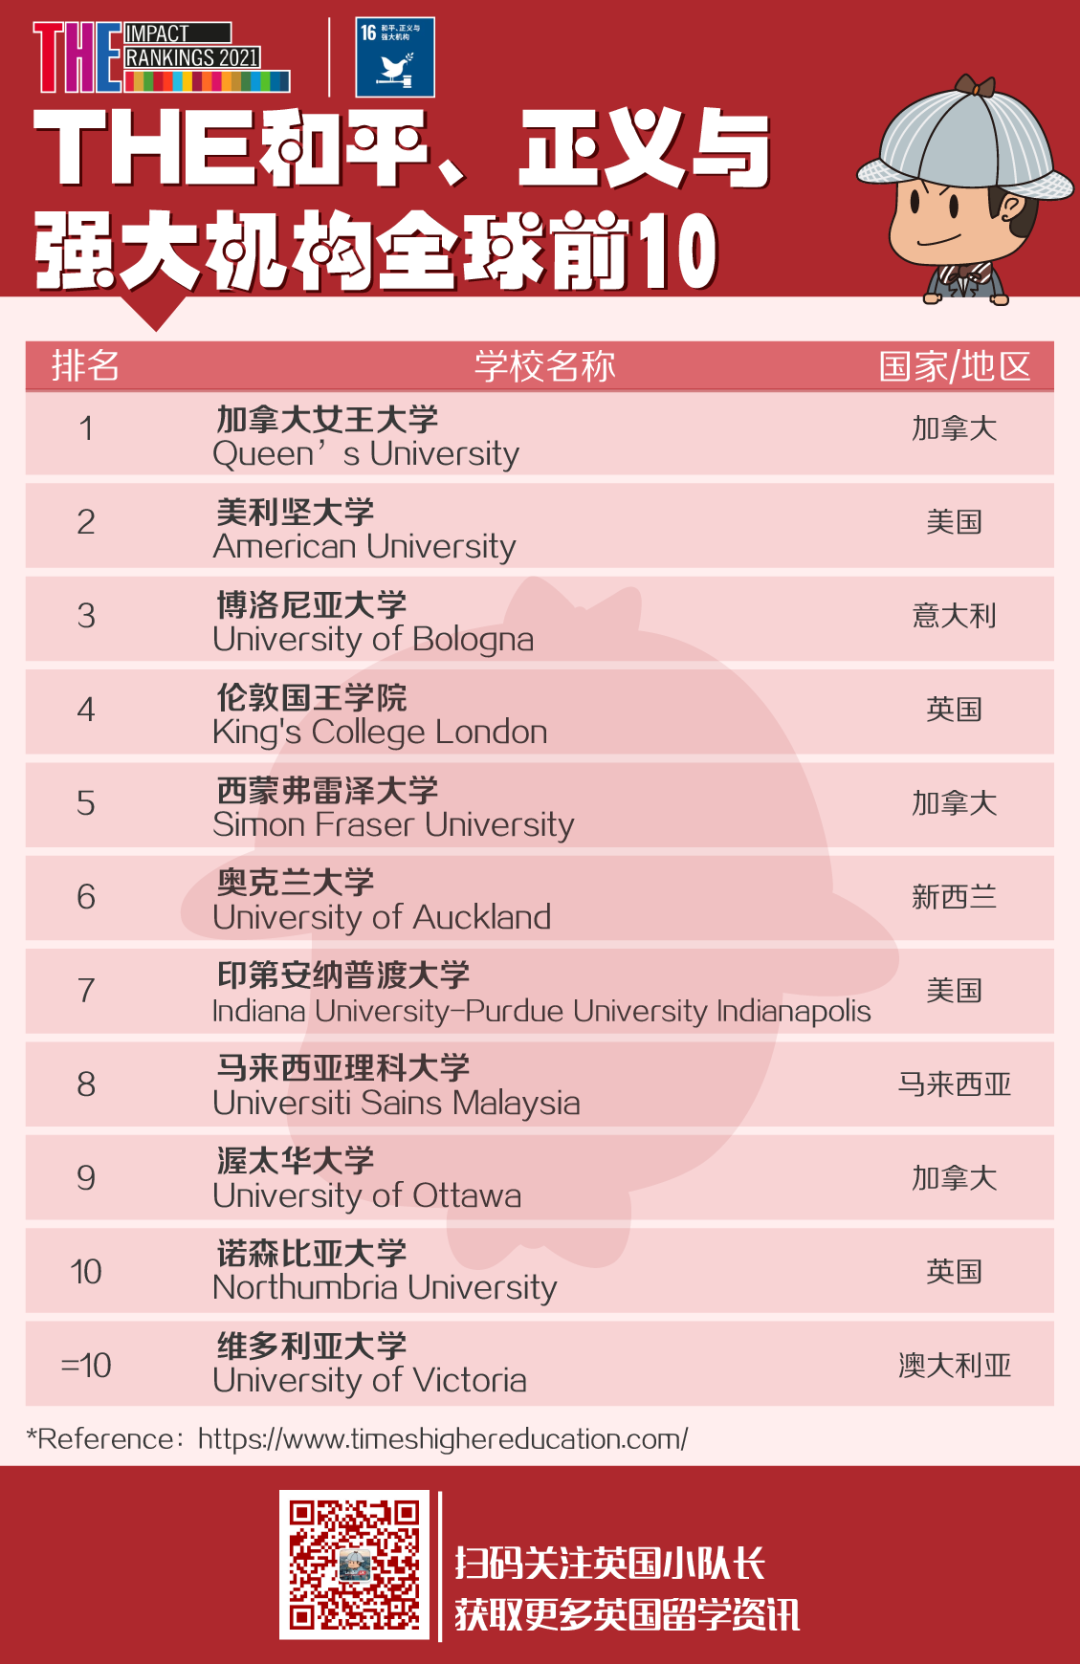 THE发布2021世界大学影响力排名，排名世界第1的高校有点令人意外  ​THE世界大学排名 排名 第25张